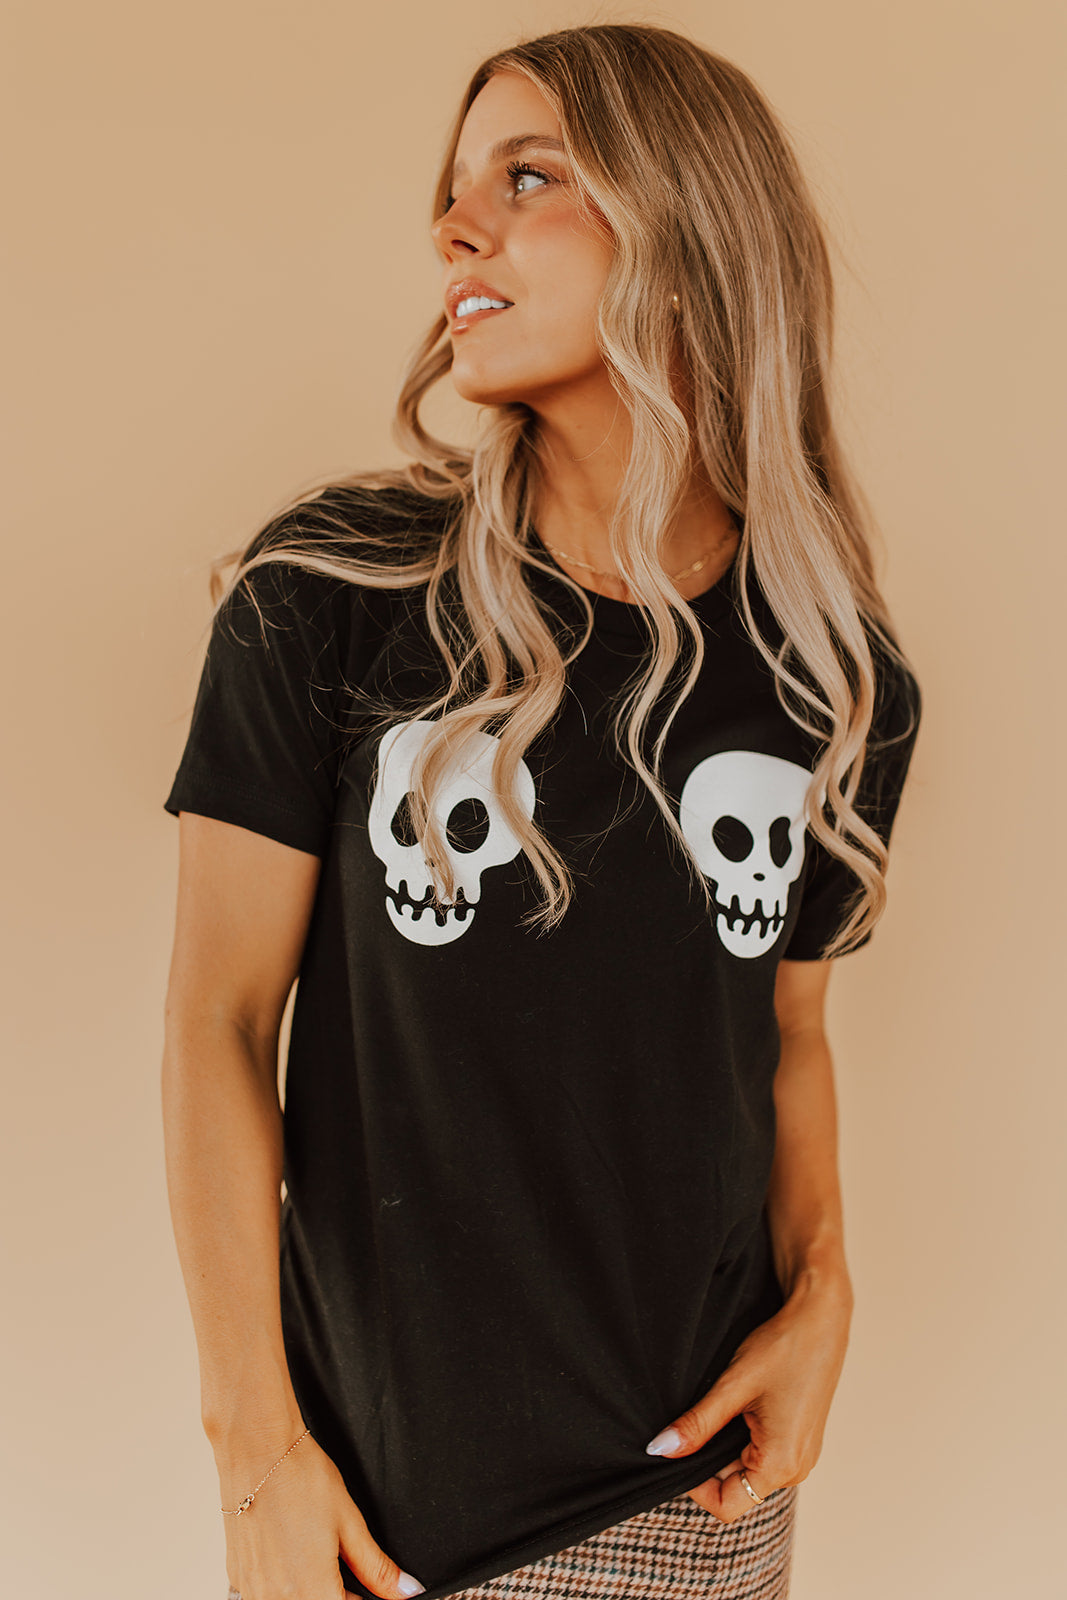 Cute skeleton black halloween outfits | PINK DESERT